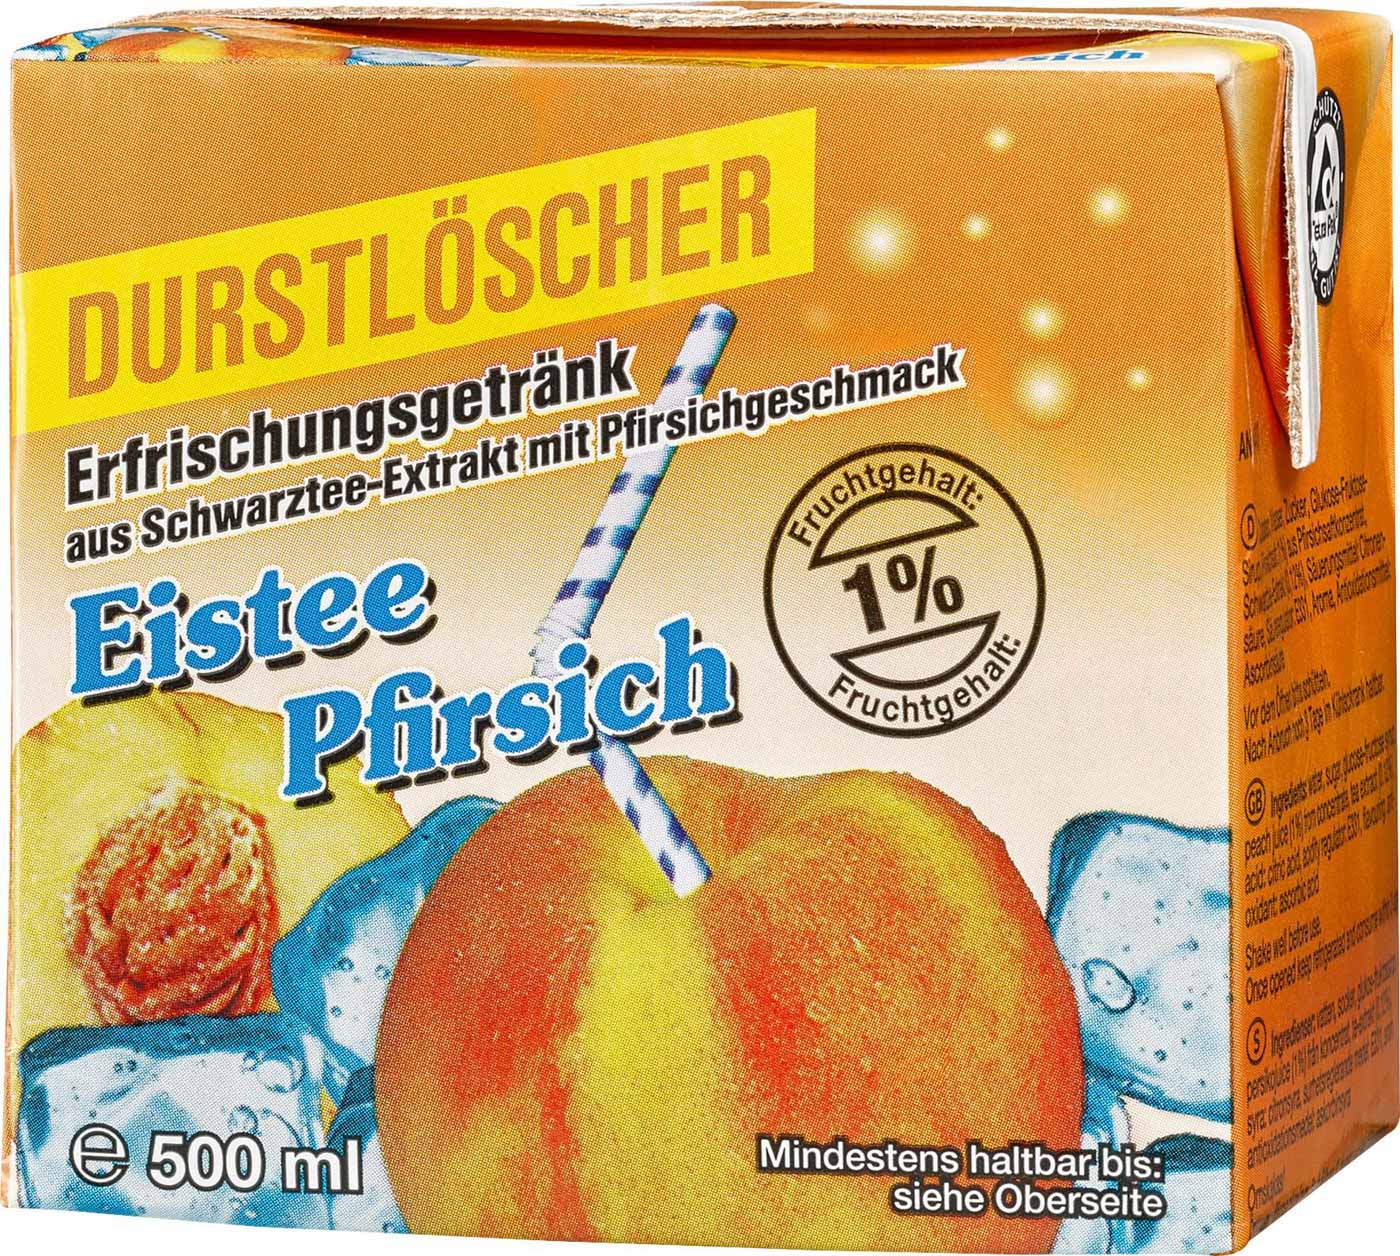 Durstlöscher Erfrischungsgetränk Eistee Pfirsich 0,5L Tetrapack